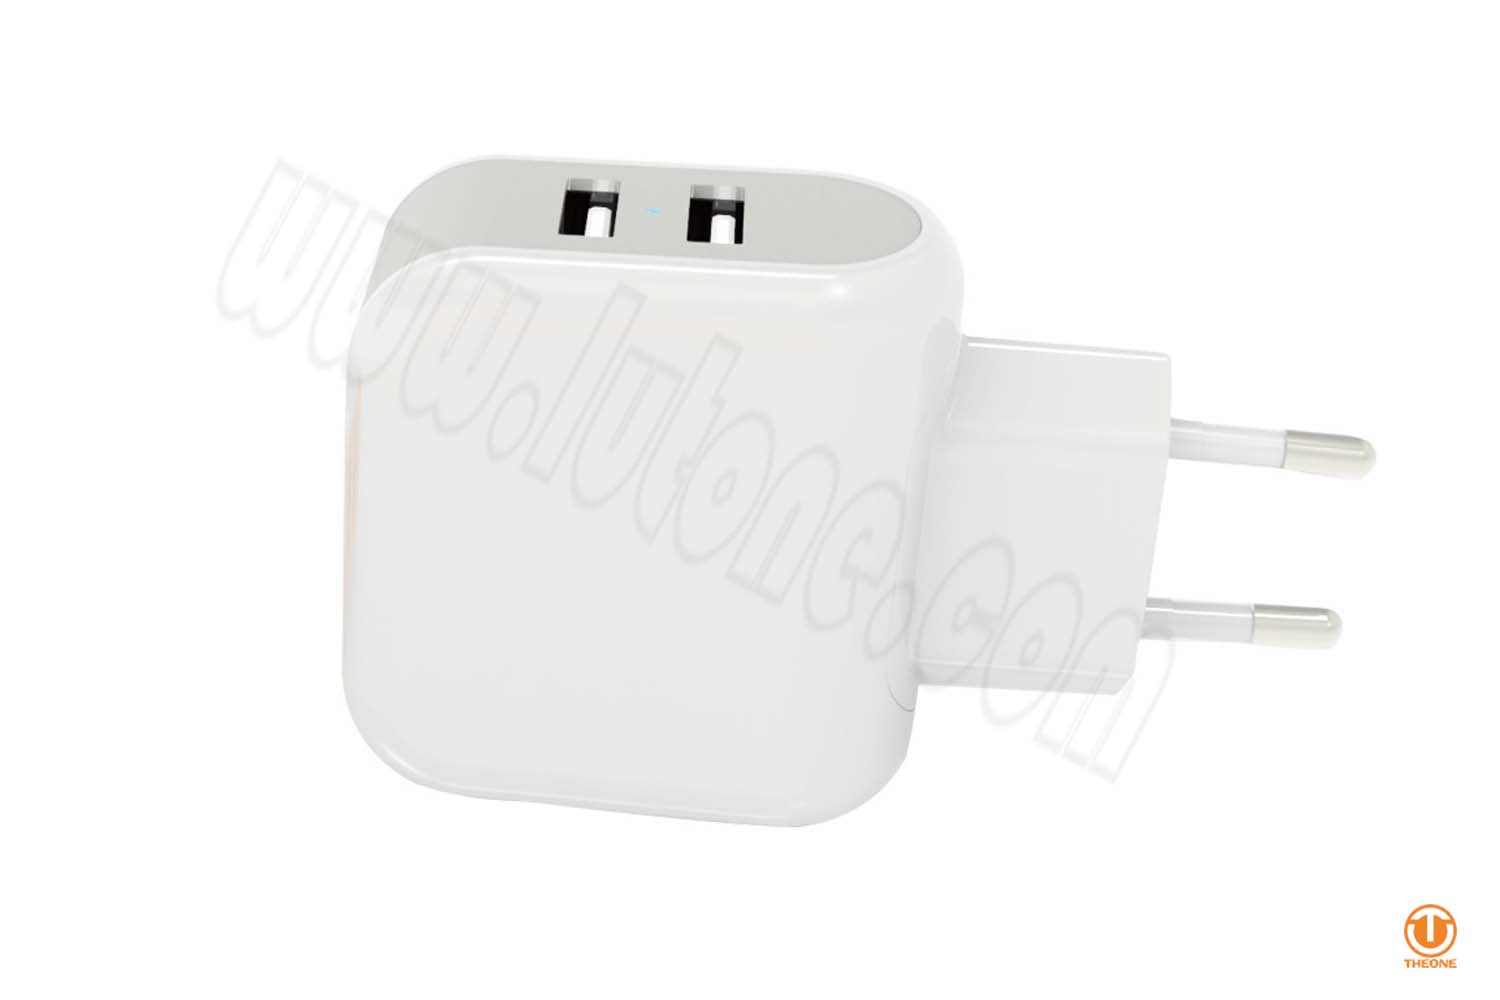 tc04b2-2 dual usb wall charger